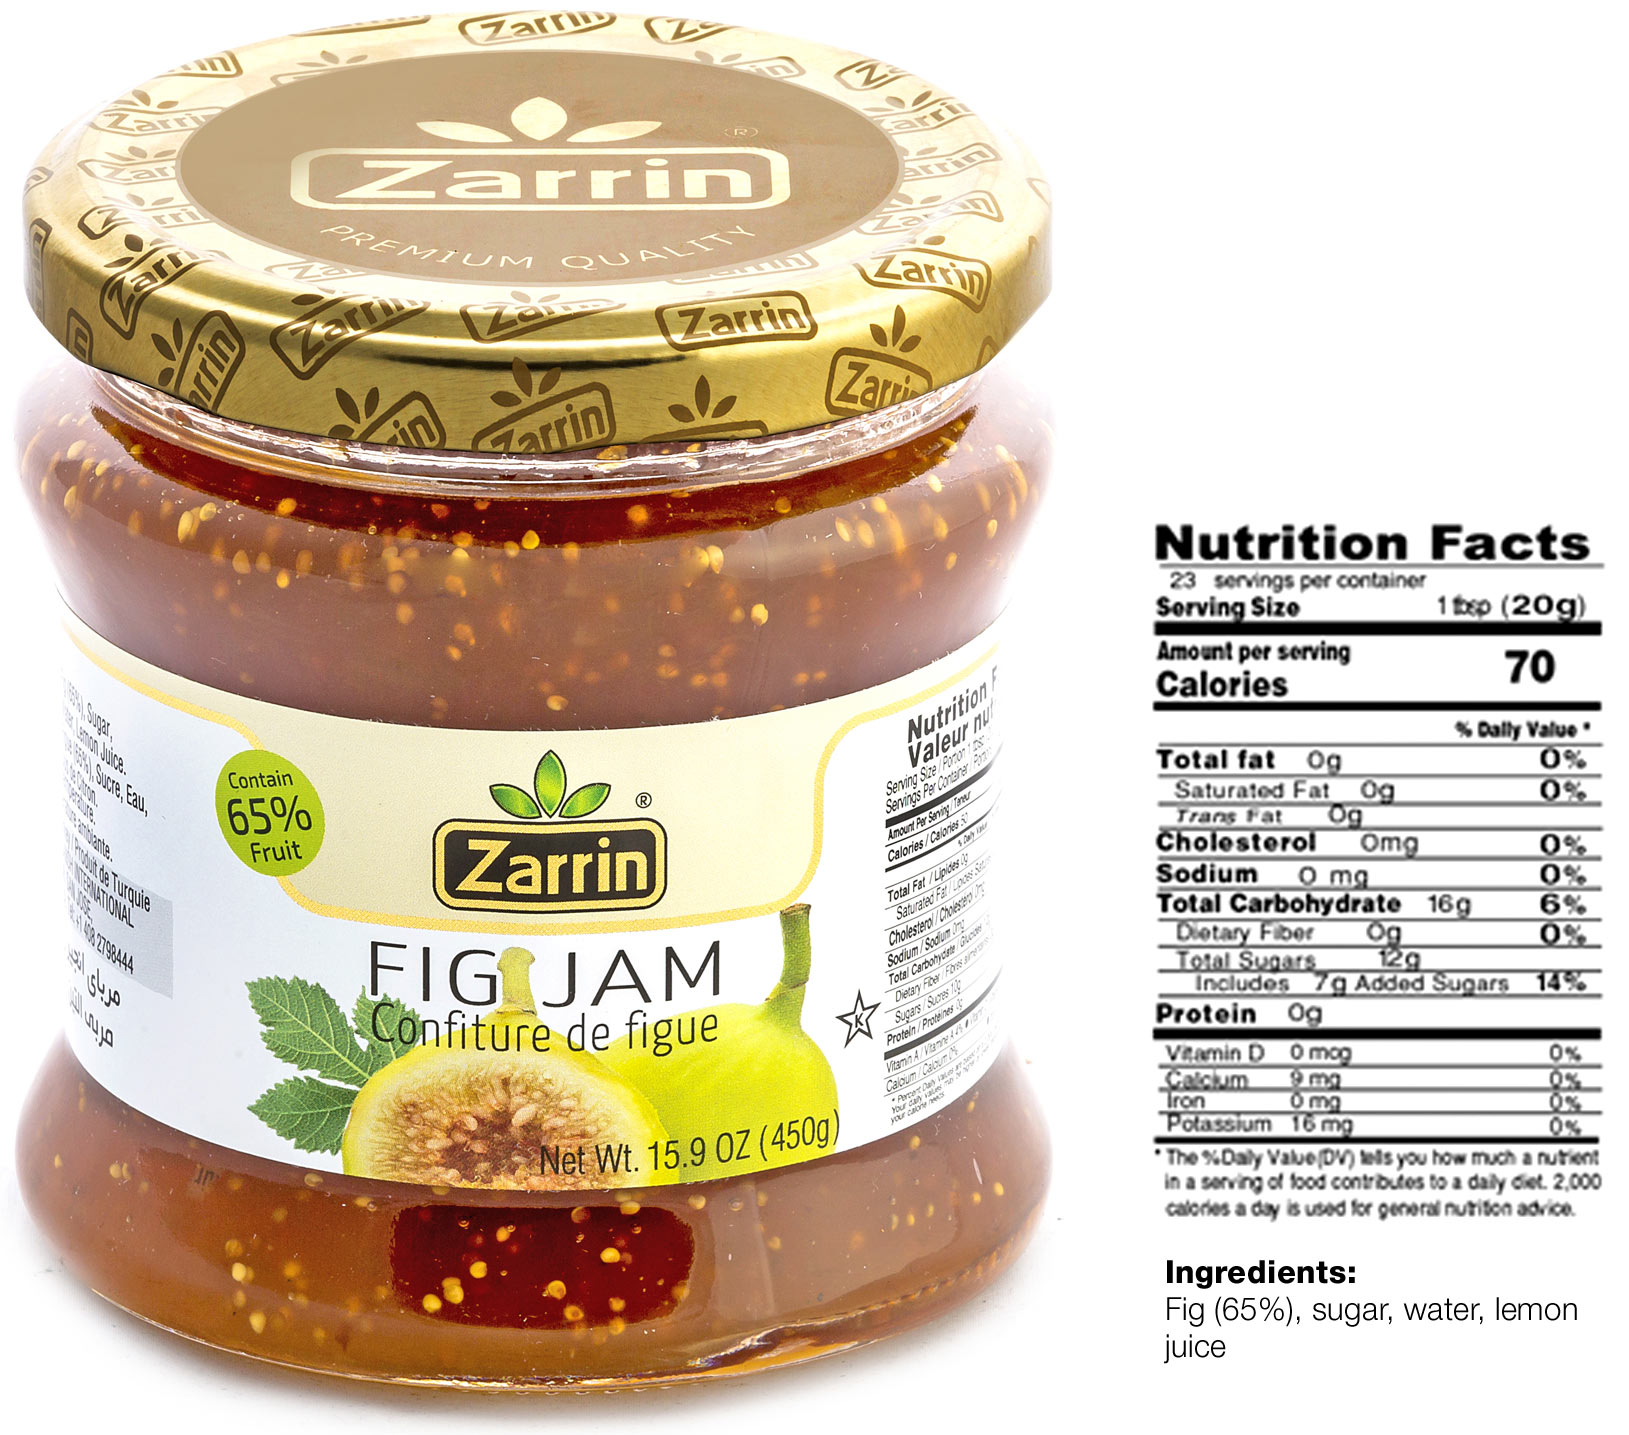 Zarrin fig jam in 15.9 oz glass jar.